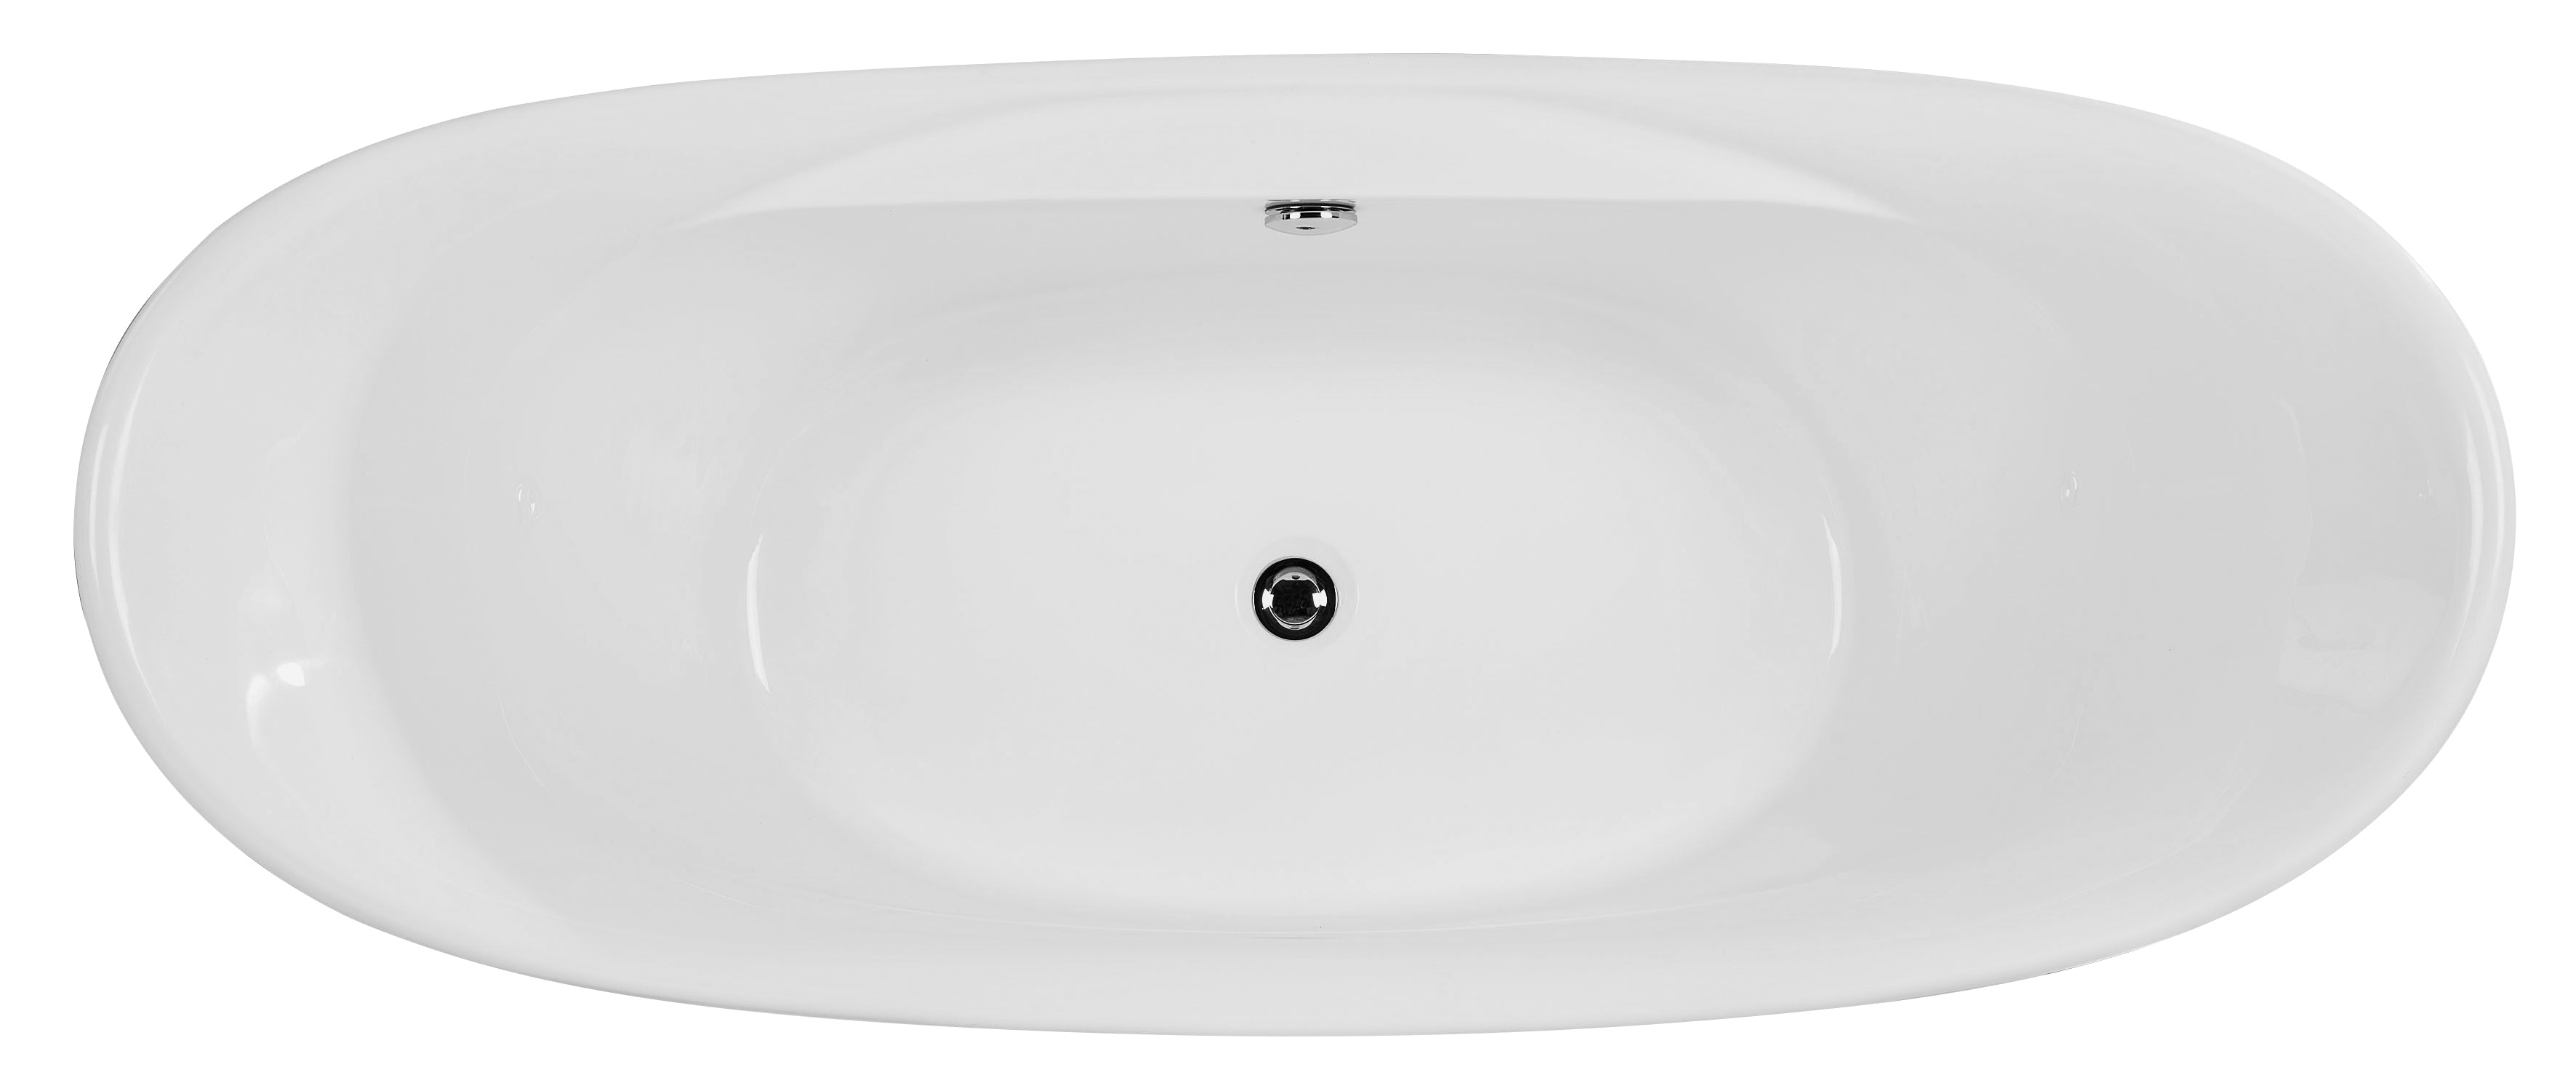 ALFI Brand - 68 inch White Oval Acrylic Free Standing Soaking Bathtub | AB8803